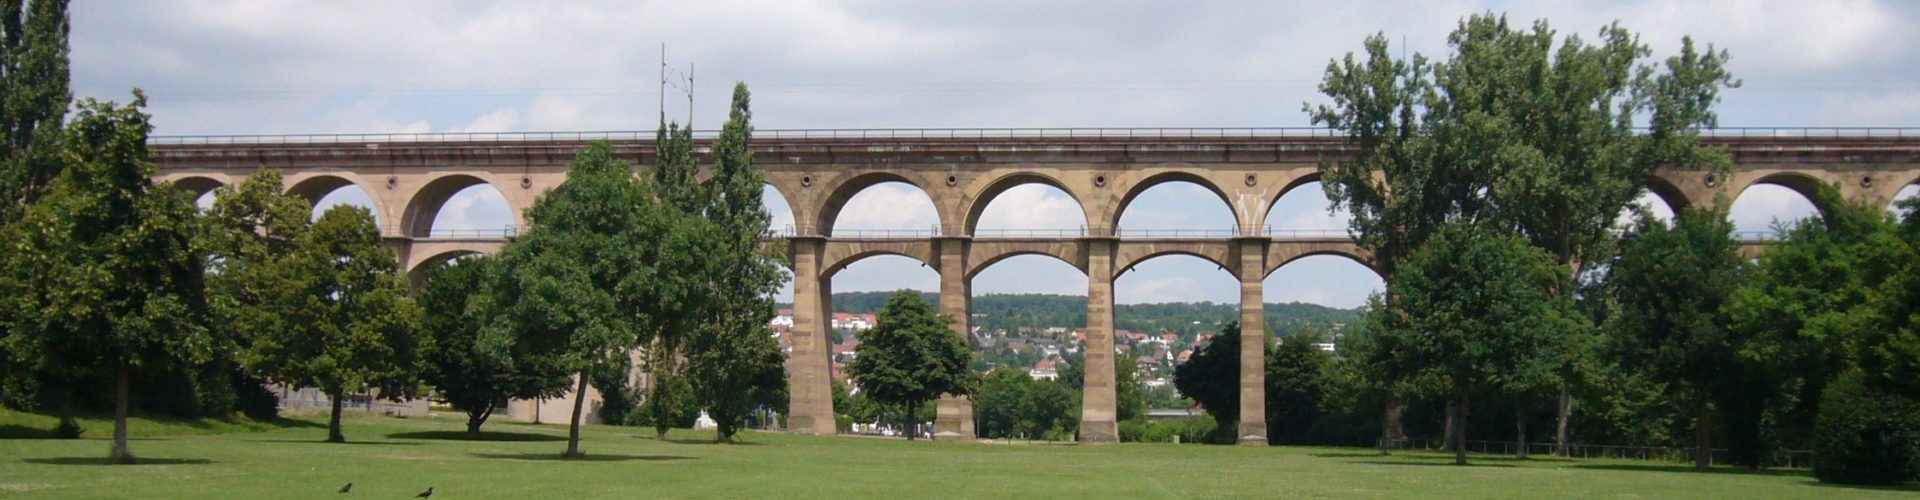 Viadukt in Bietigheim-Bissingen